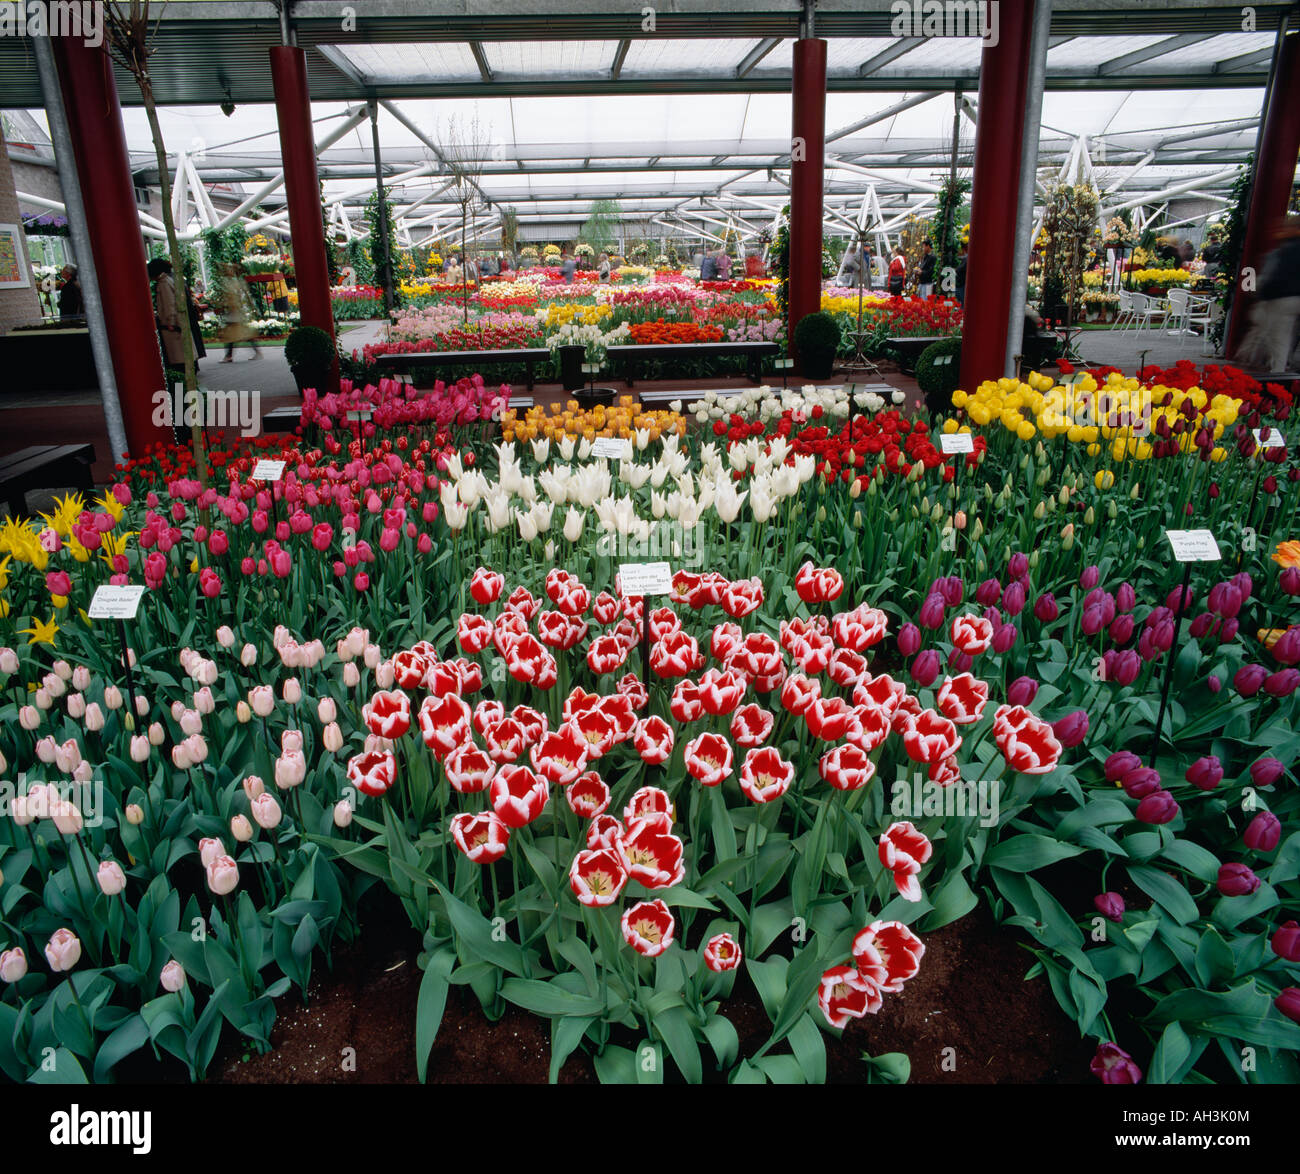 Flowering plants in nursery / The Netherlands Stock Photo - Alamy